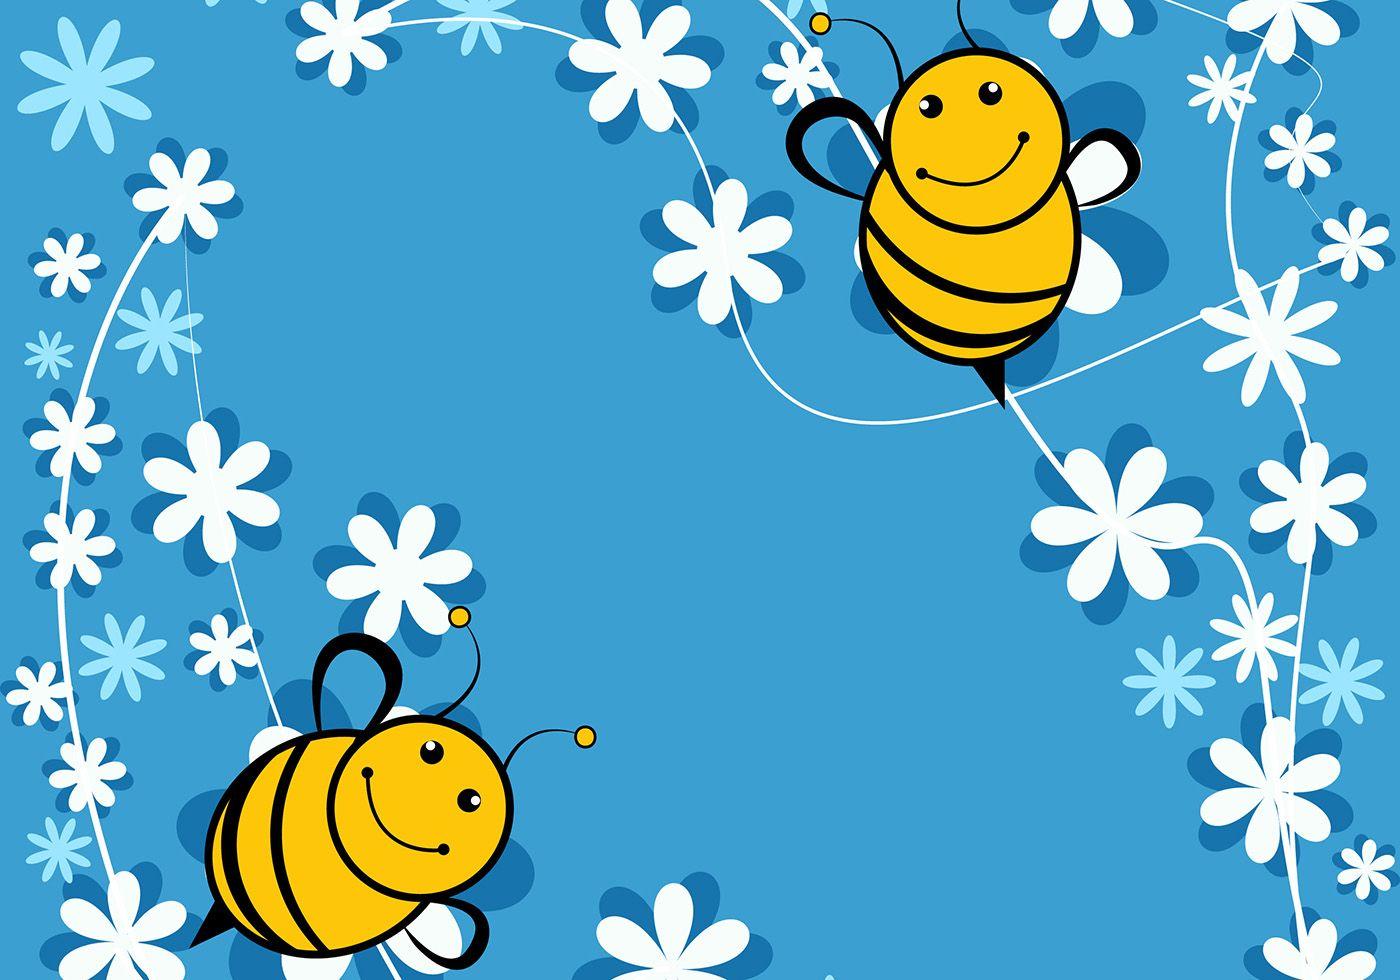 Cute Bee Wallpaper Free Vector Art - (109 Free Downloads)